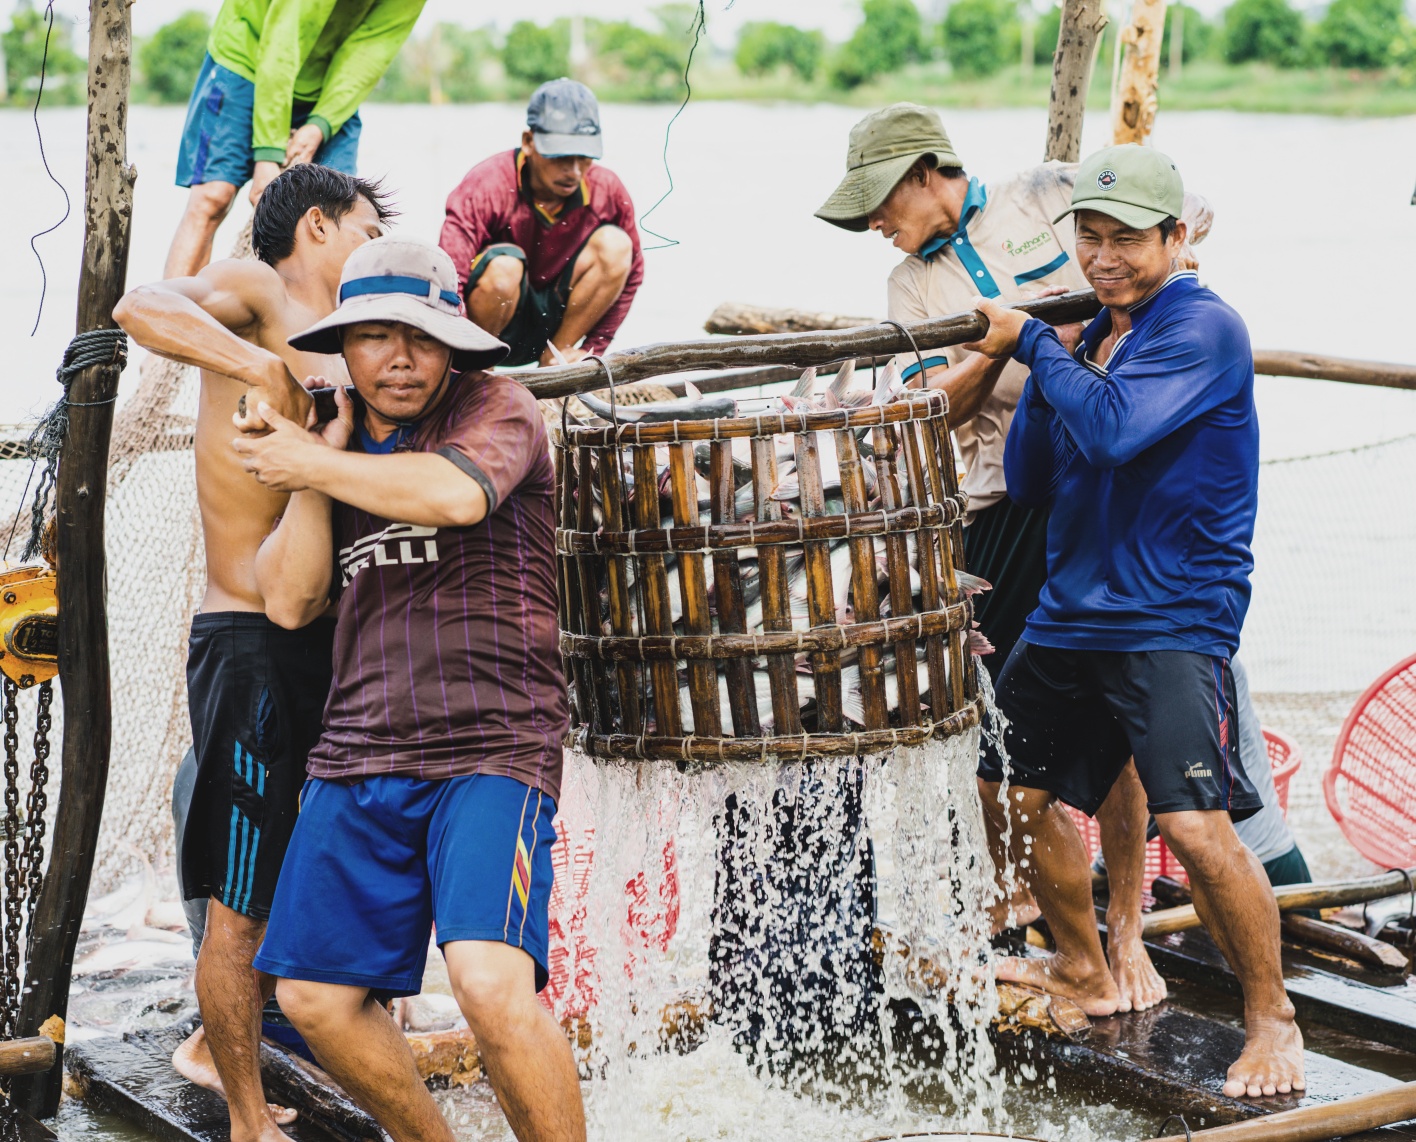 Men working together in harvesting fish